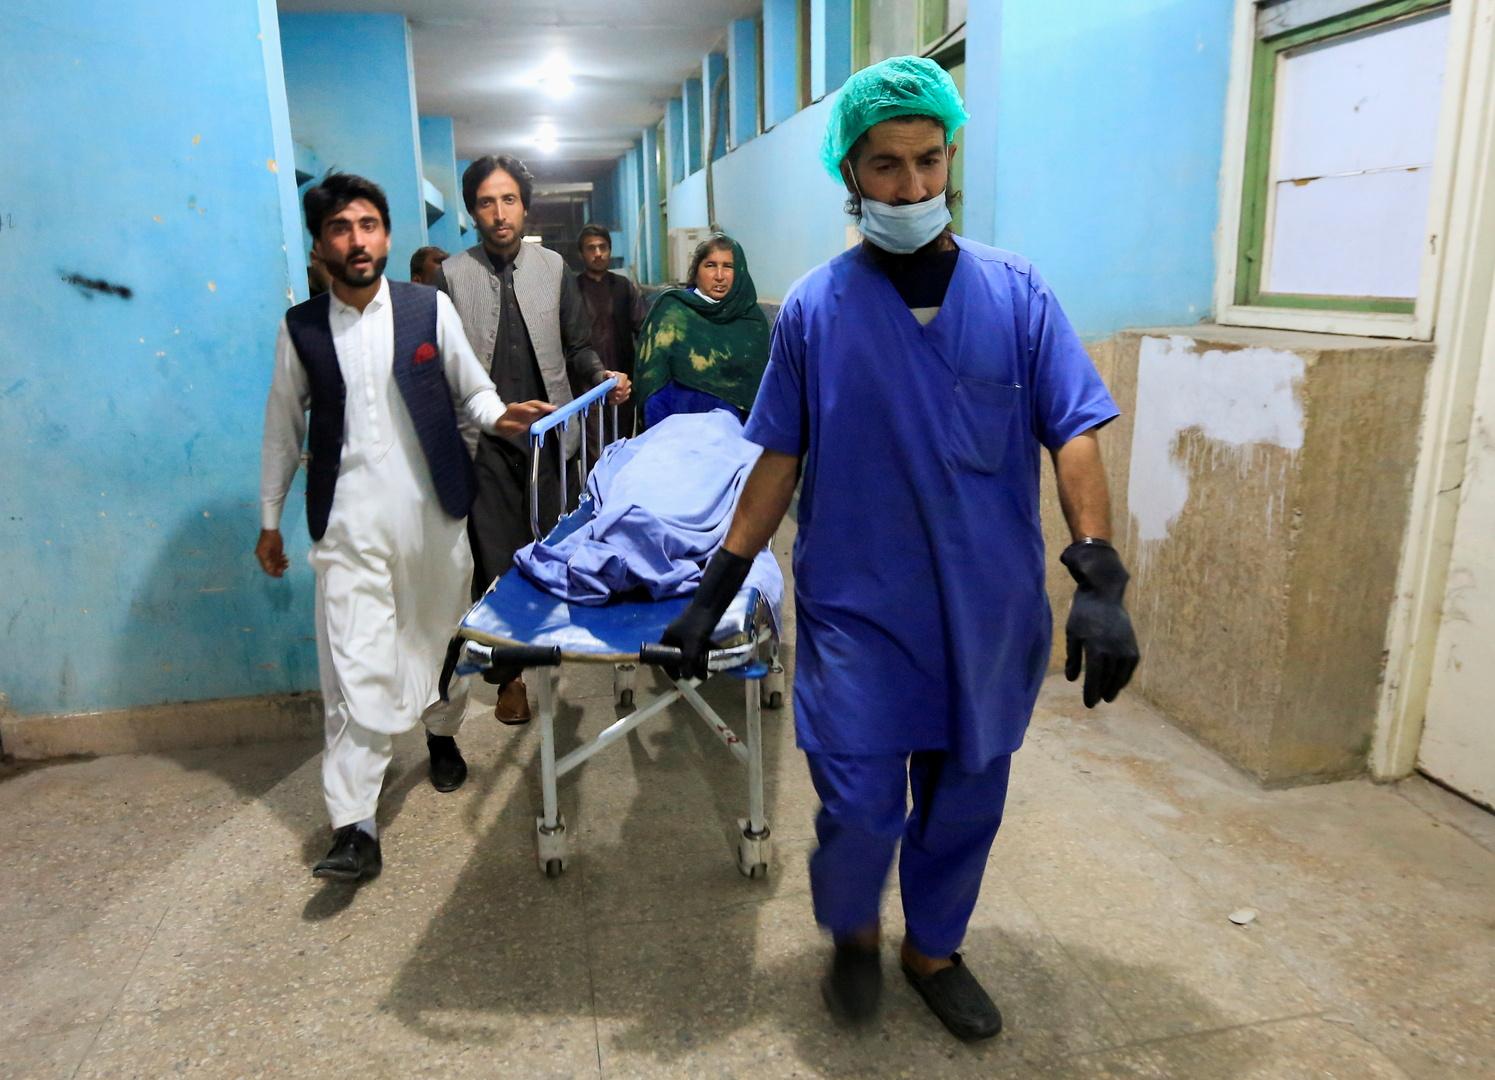 Female doctor killed in eastern Afghanistan after murder of media workers